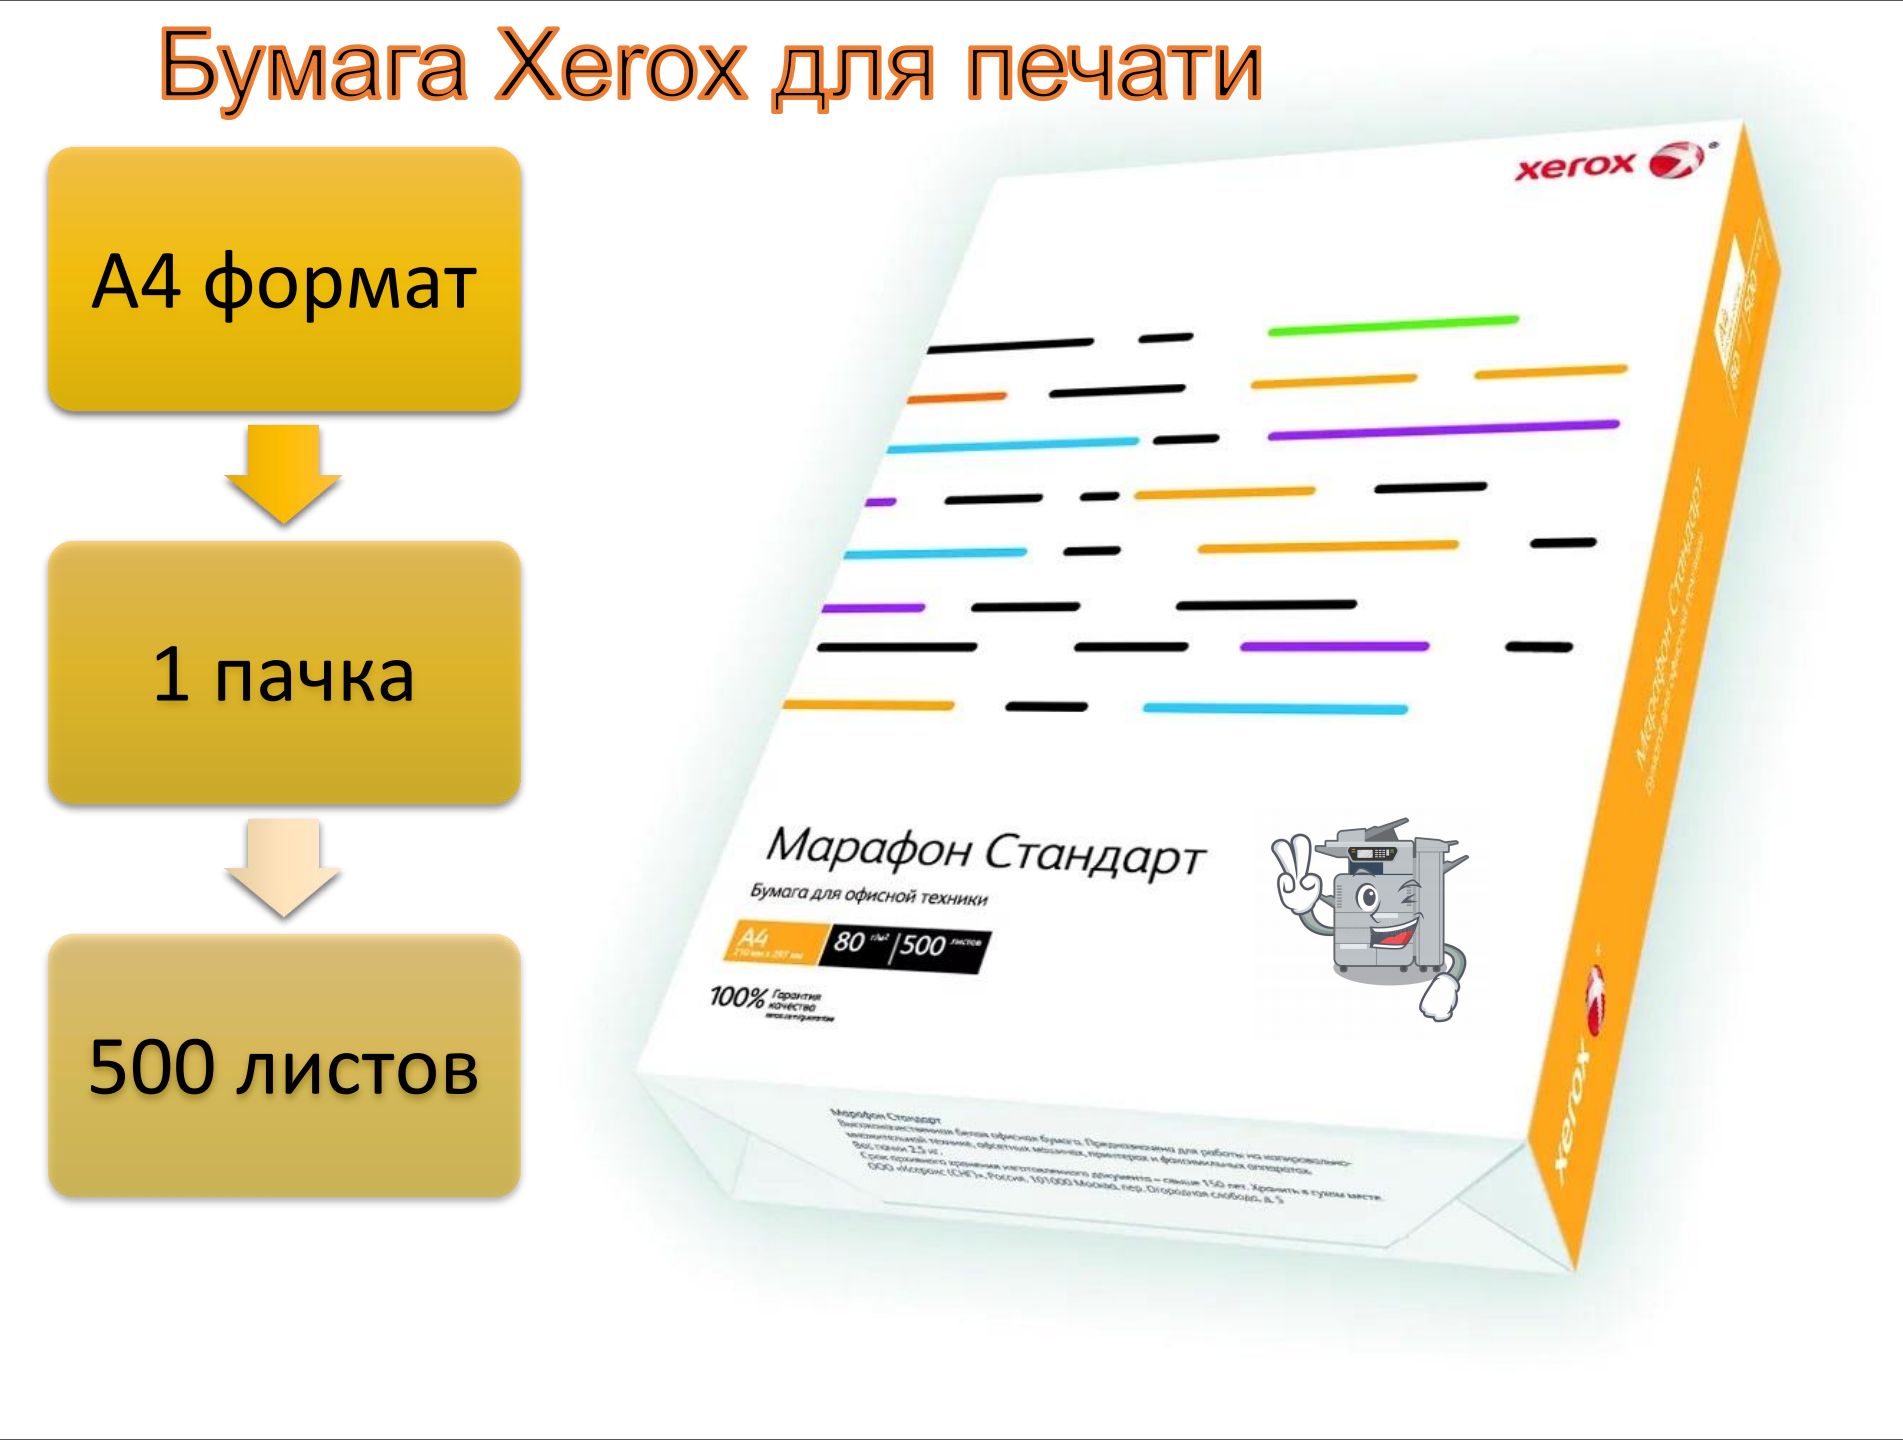 Бумага xerox марафон. Бумага офисная Xerox Marathon Standart, Формат а4. Бумага ксерокс марафон стандарт. Бумага Xerox марафон стандарт. Бумага а4 Xerox марафон стандарт.